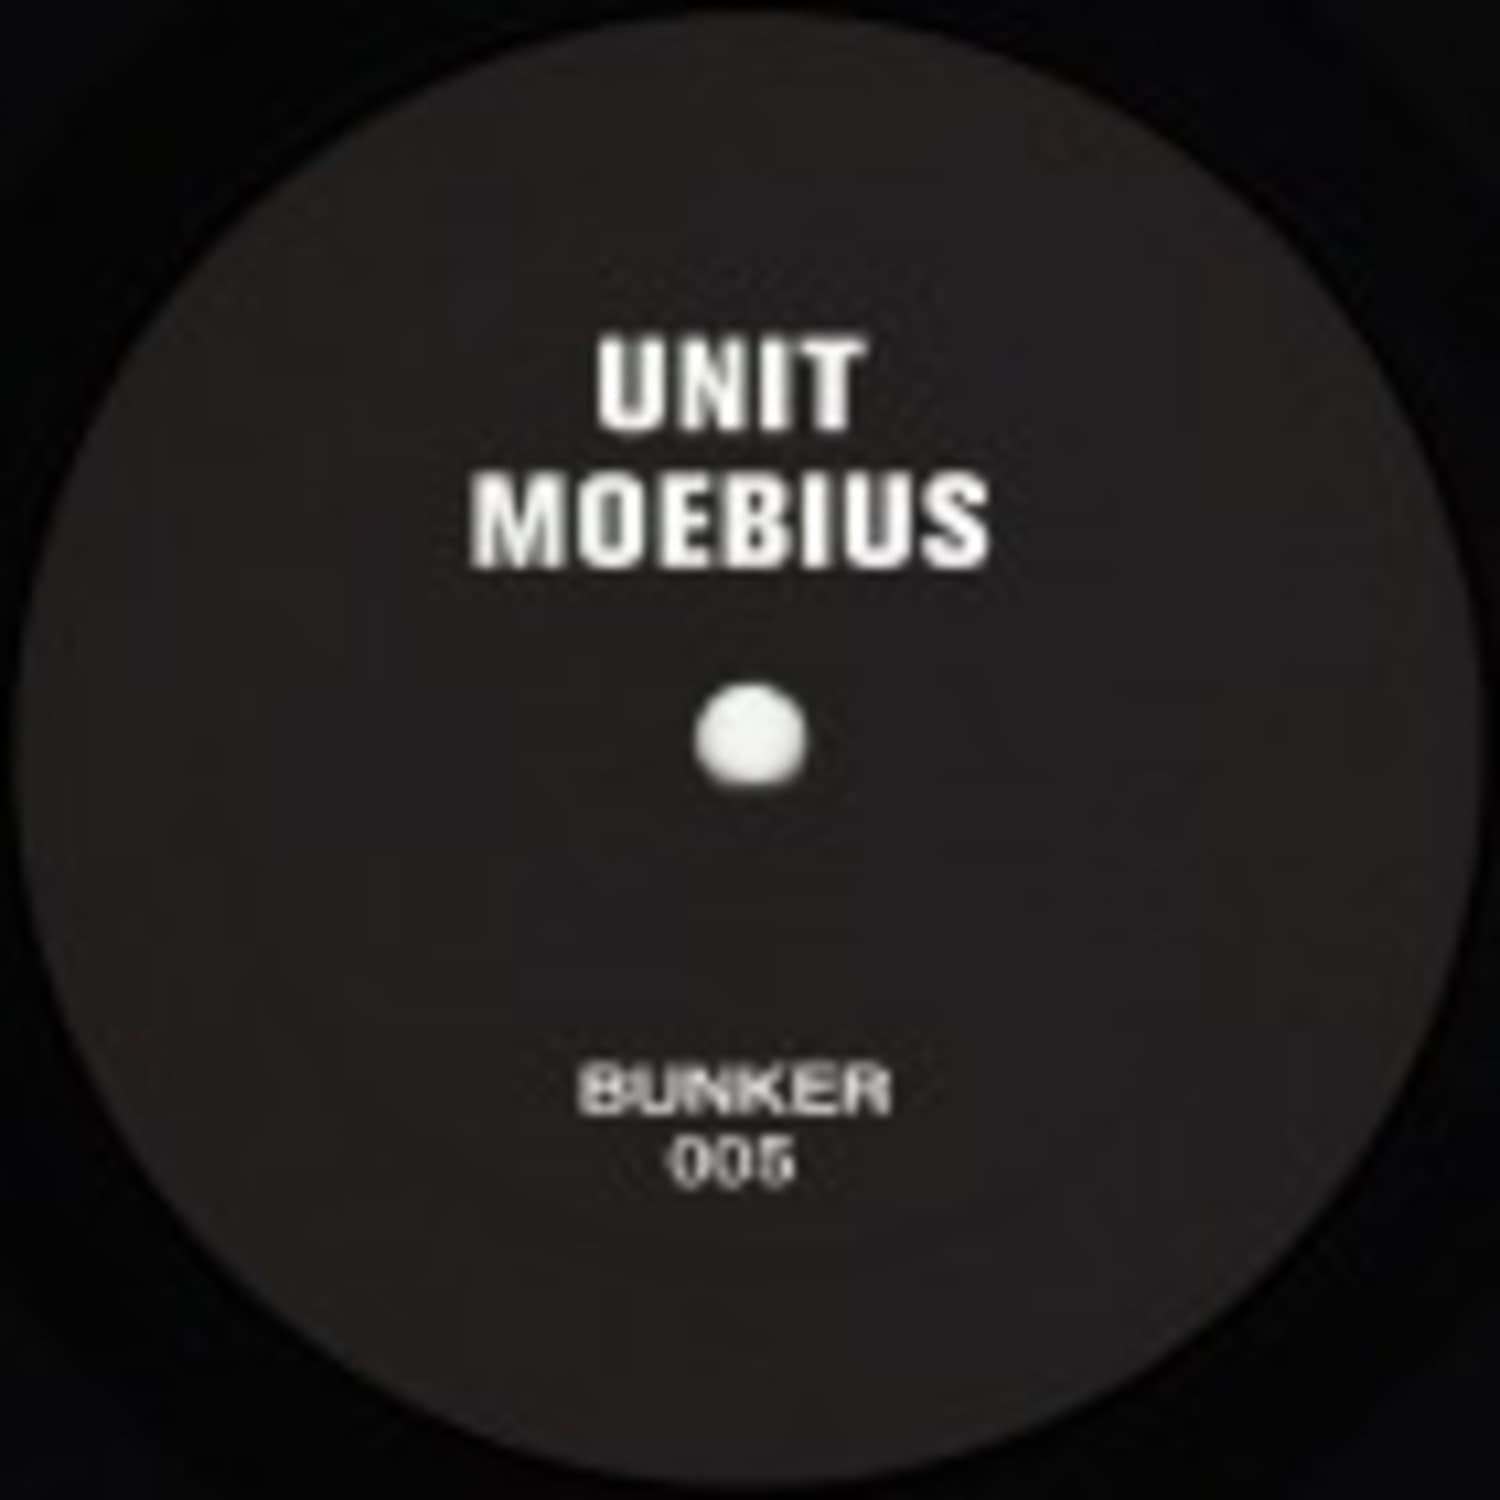 Unit Moebius - BUNKER 005 